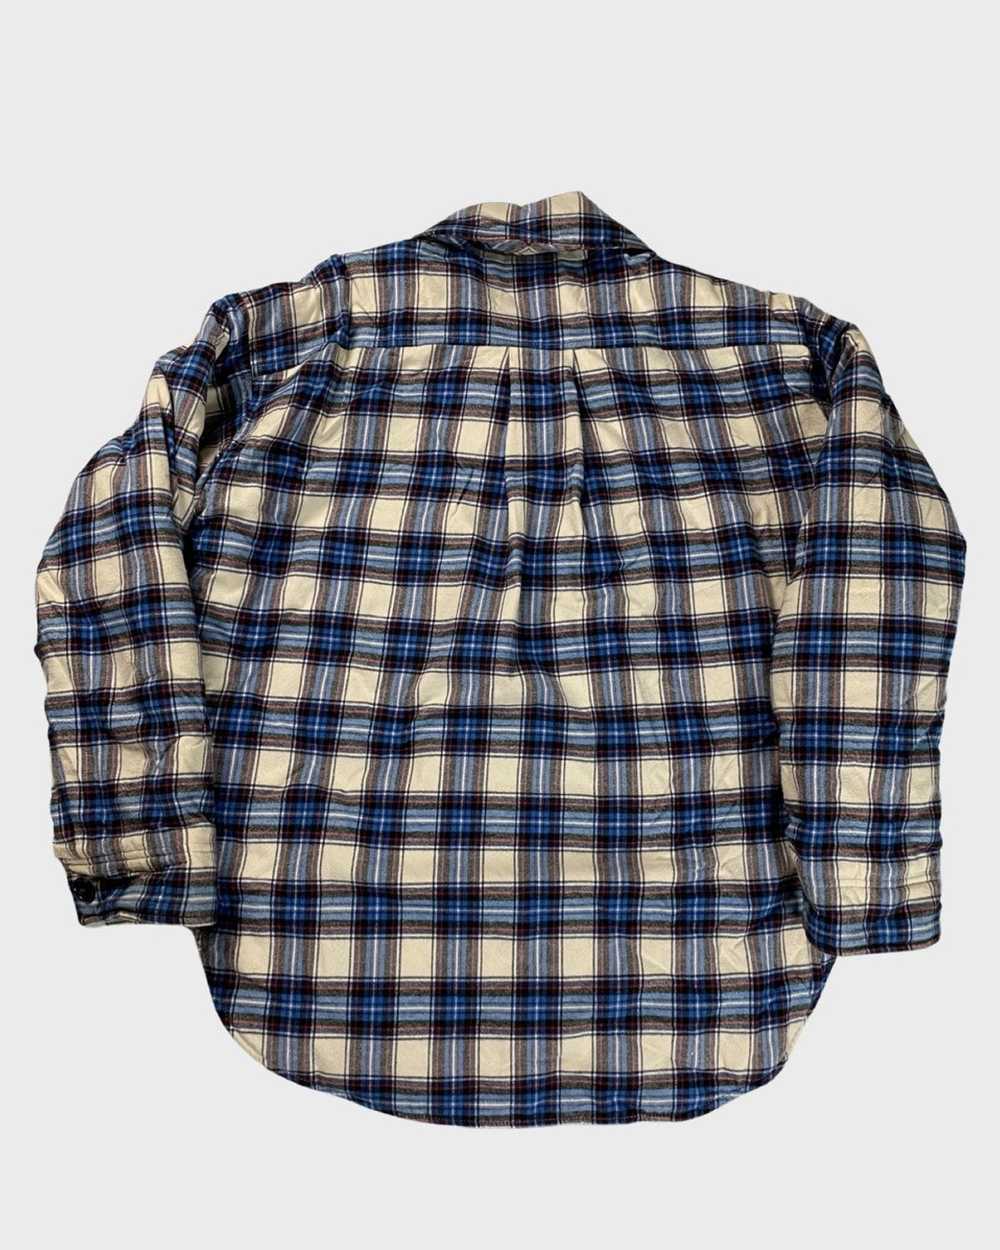 Balenciaga SZ44 Padded checkered flannel jacket i… - image 2